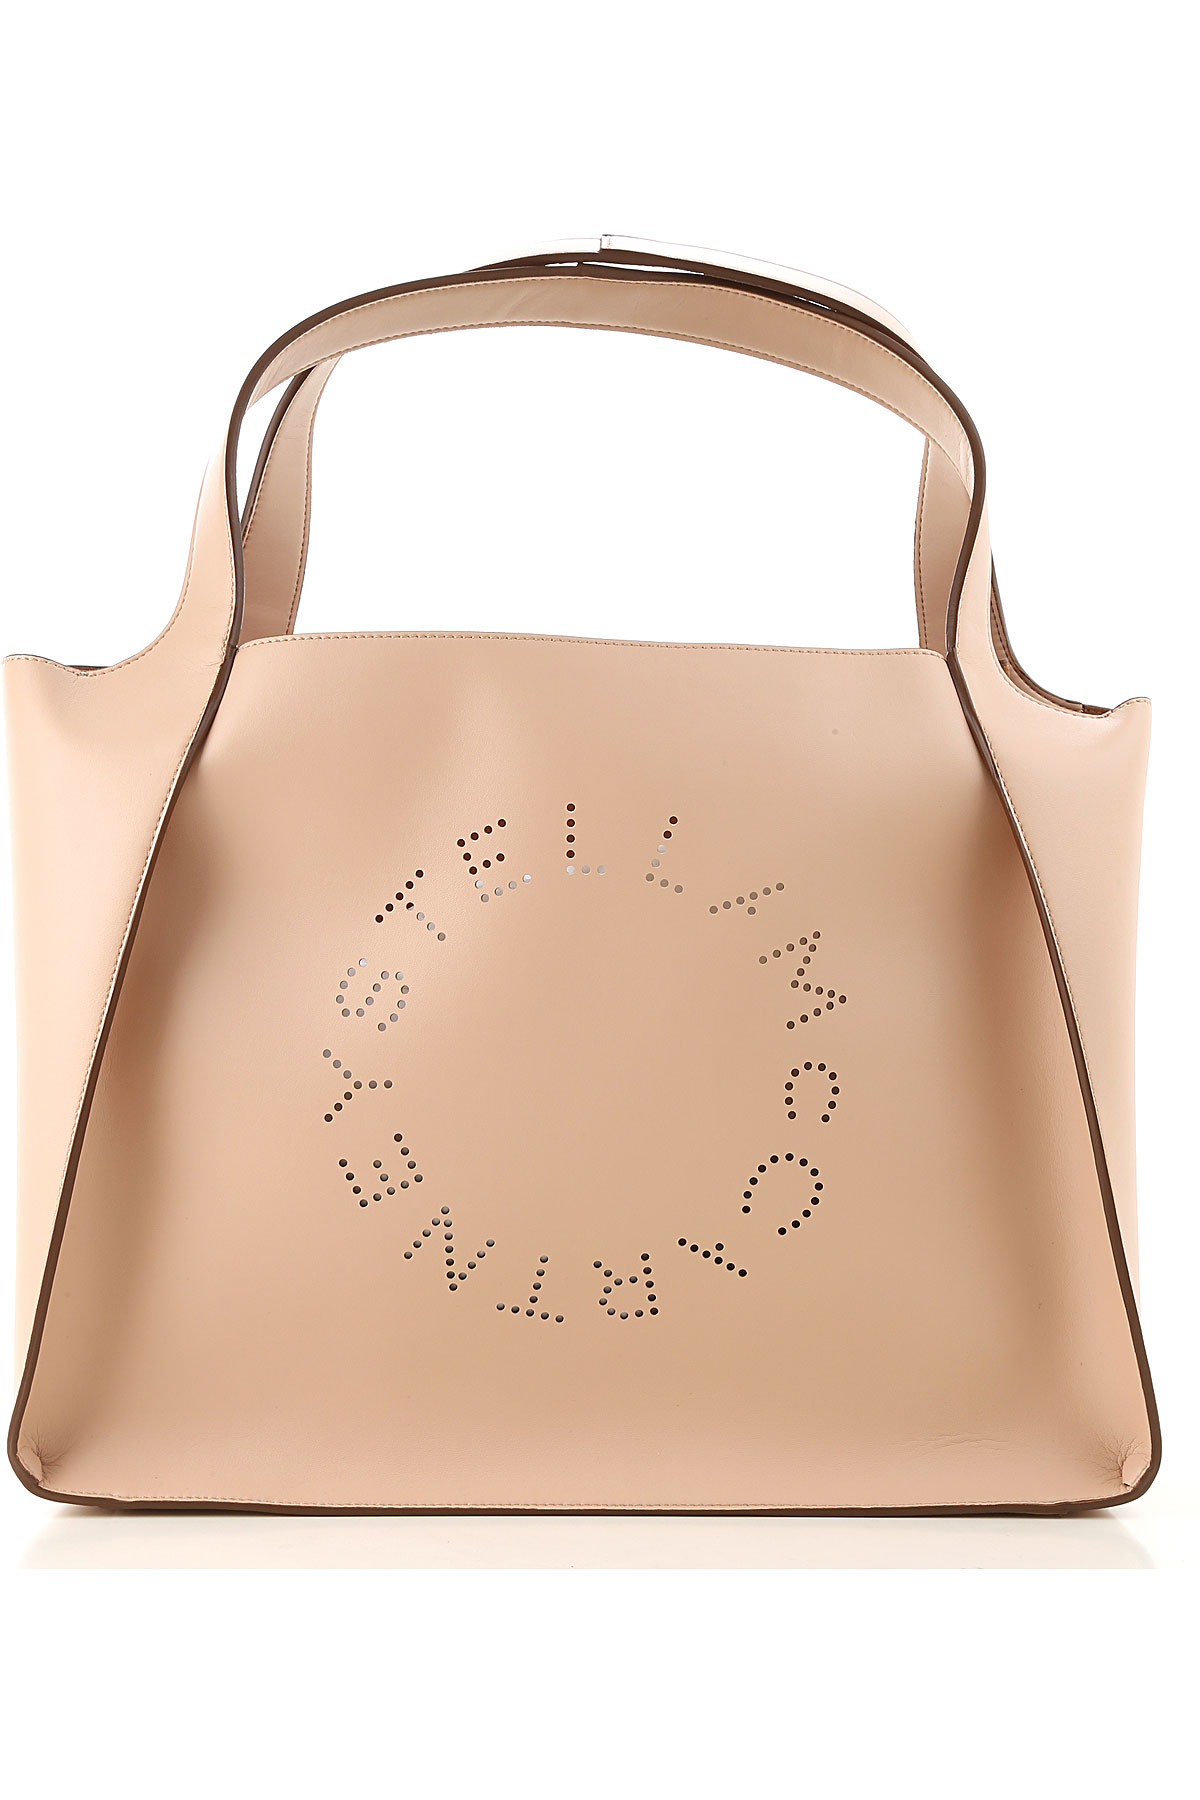 Handbags Stella McCartney, Style code: 502793-w8542-6802